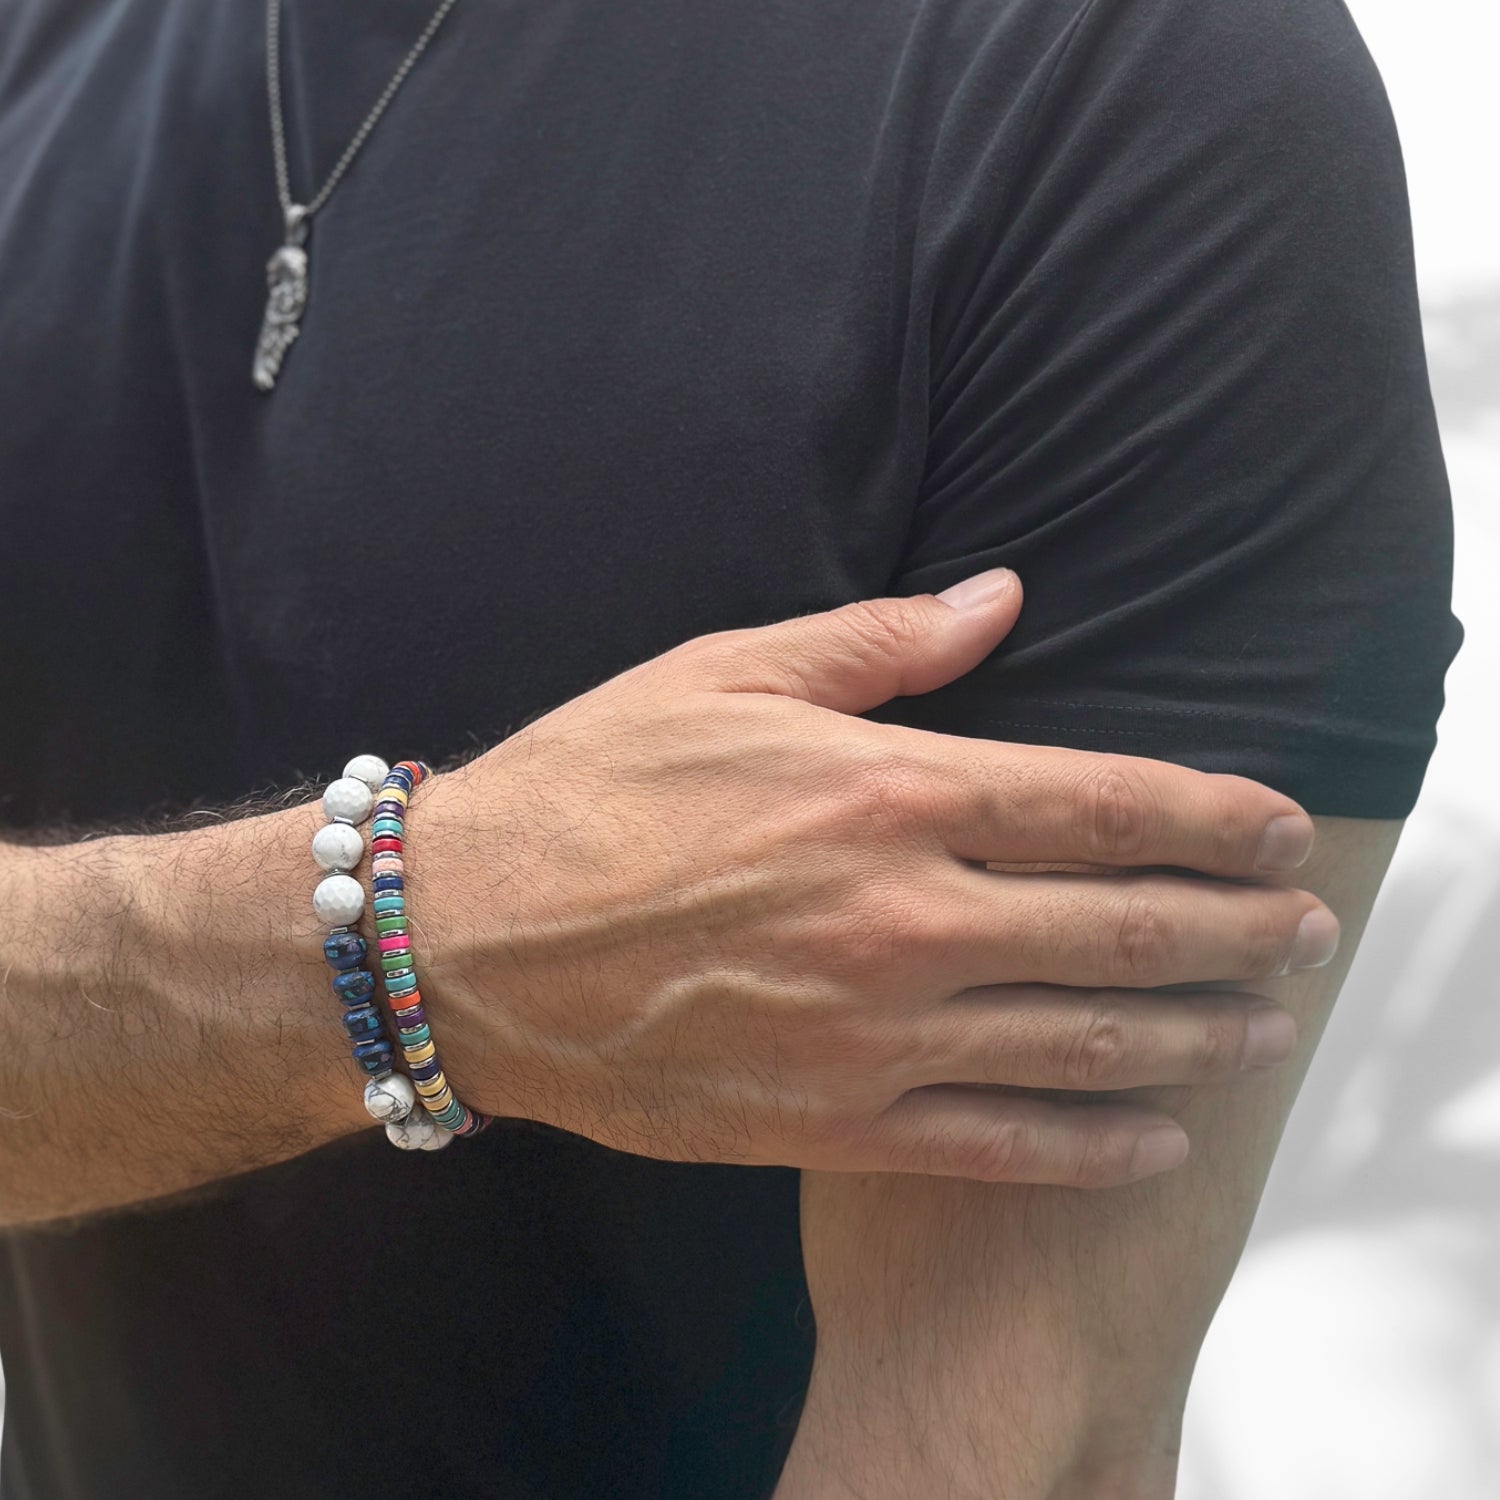 Handcrafted Adjustable Summer Bracelet featuring colorful nugget gemstones and sleek silver hematite spacers.